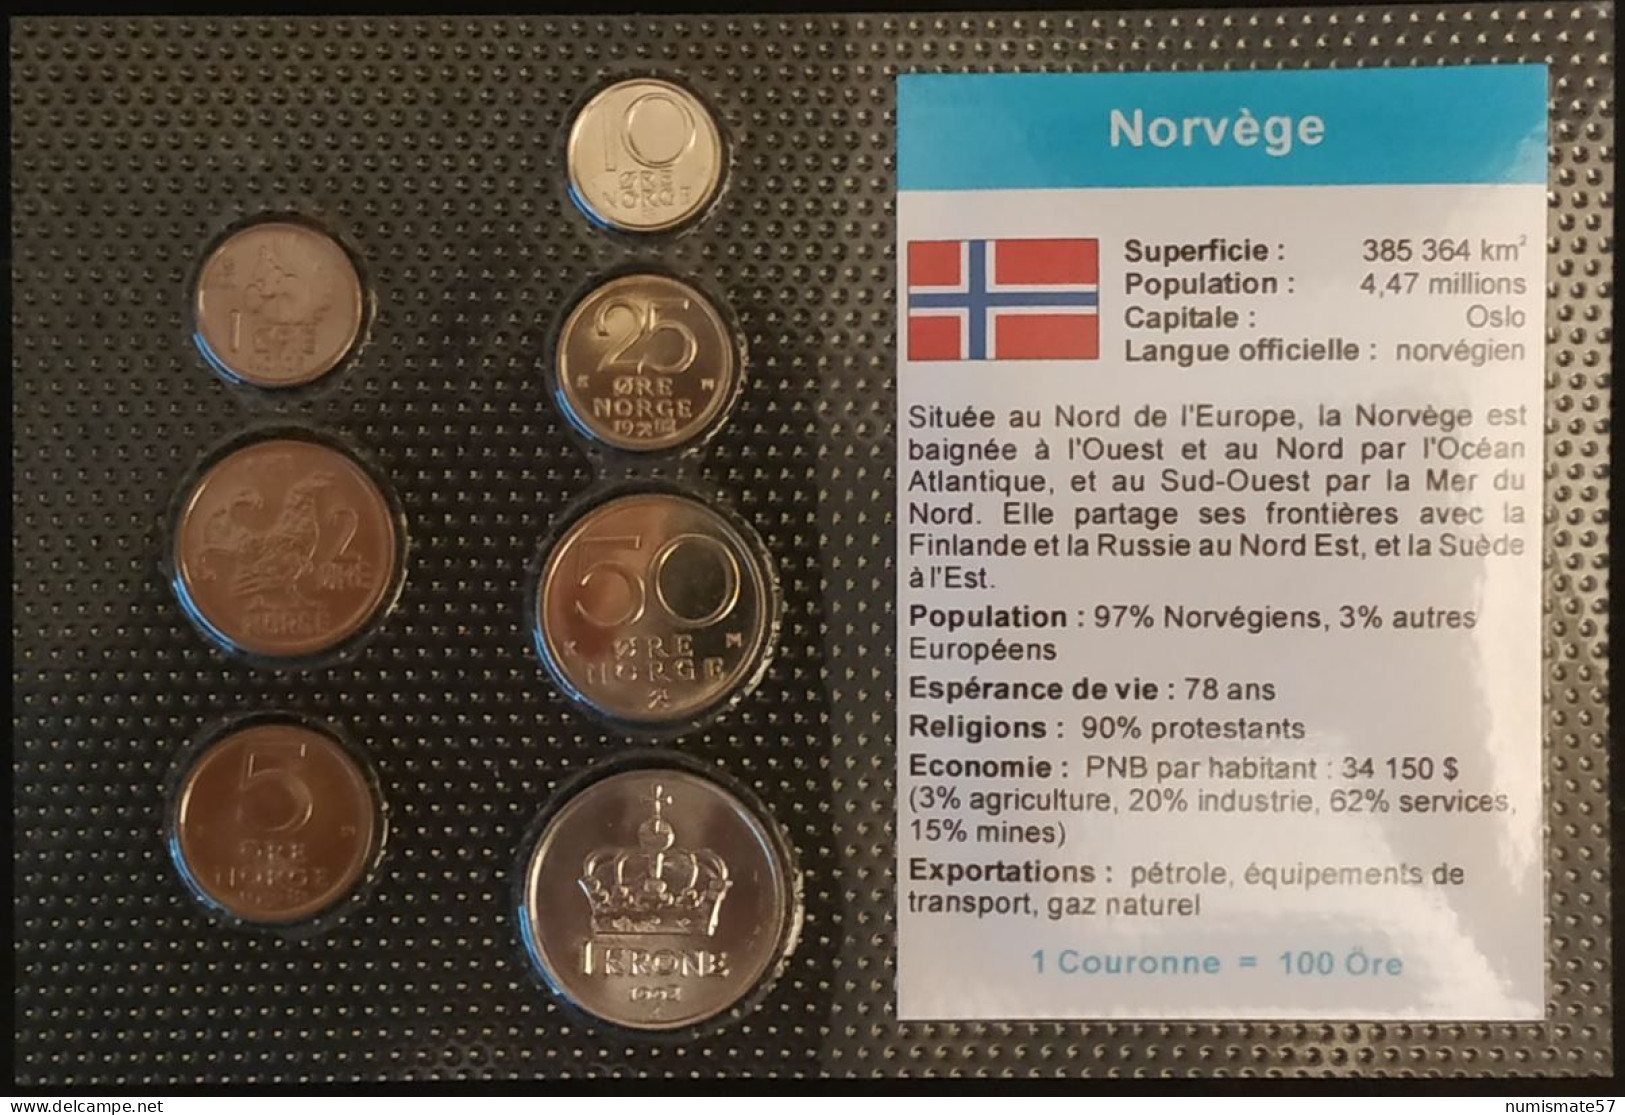 NORVEGE - NORWAY - SERIE DE 7 PIECES DIFFERENTES - 1 - 2 - 5 - 10 - 25 - 50 - ORE - 1 KRONE - Norvegia